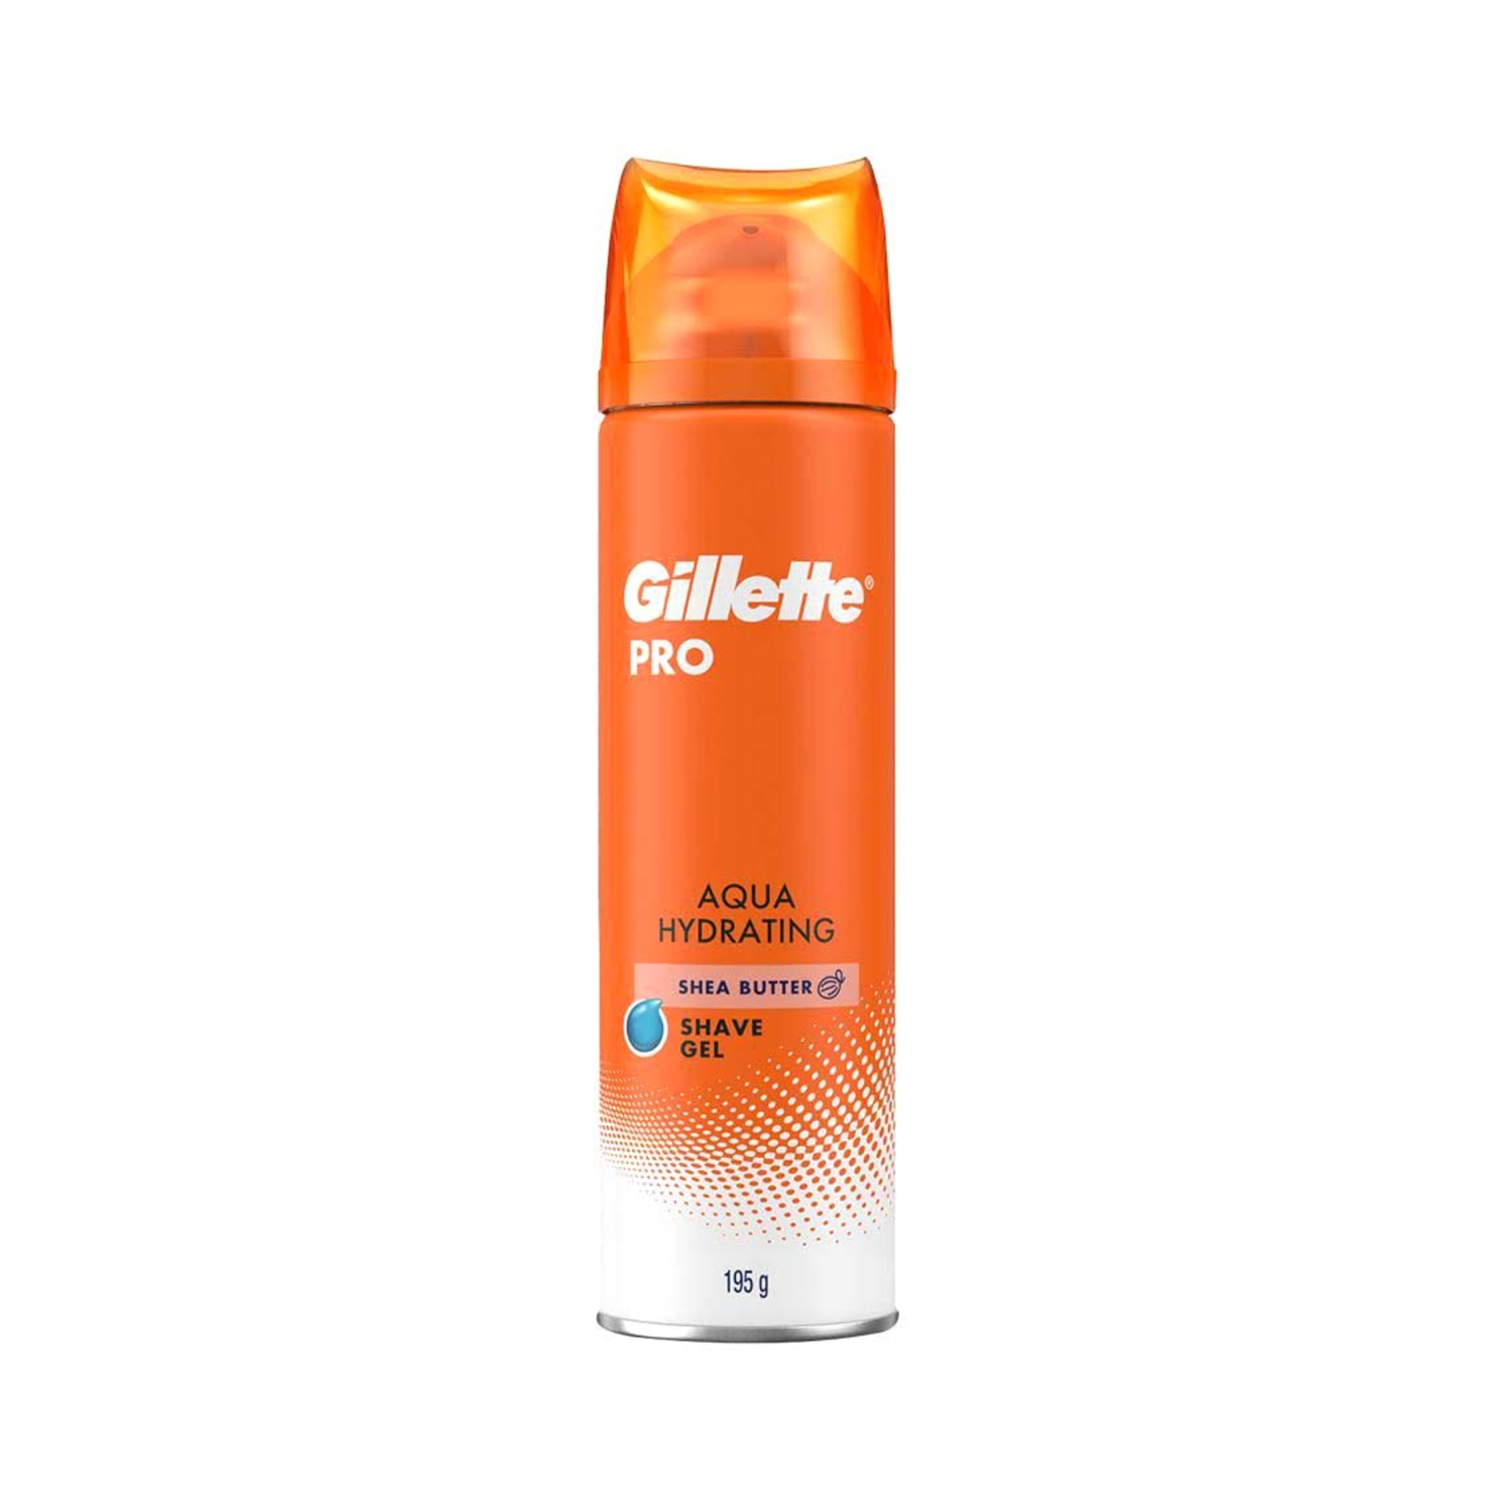 Gillette | Gillette Aqua Hydrating with Shea Butter Pro Shaving Gel (195g)